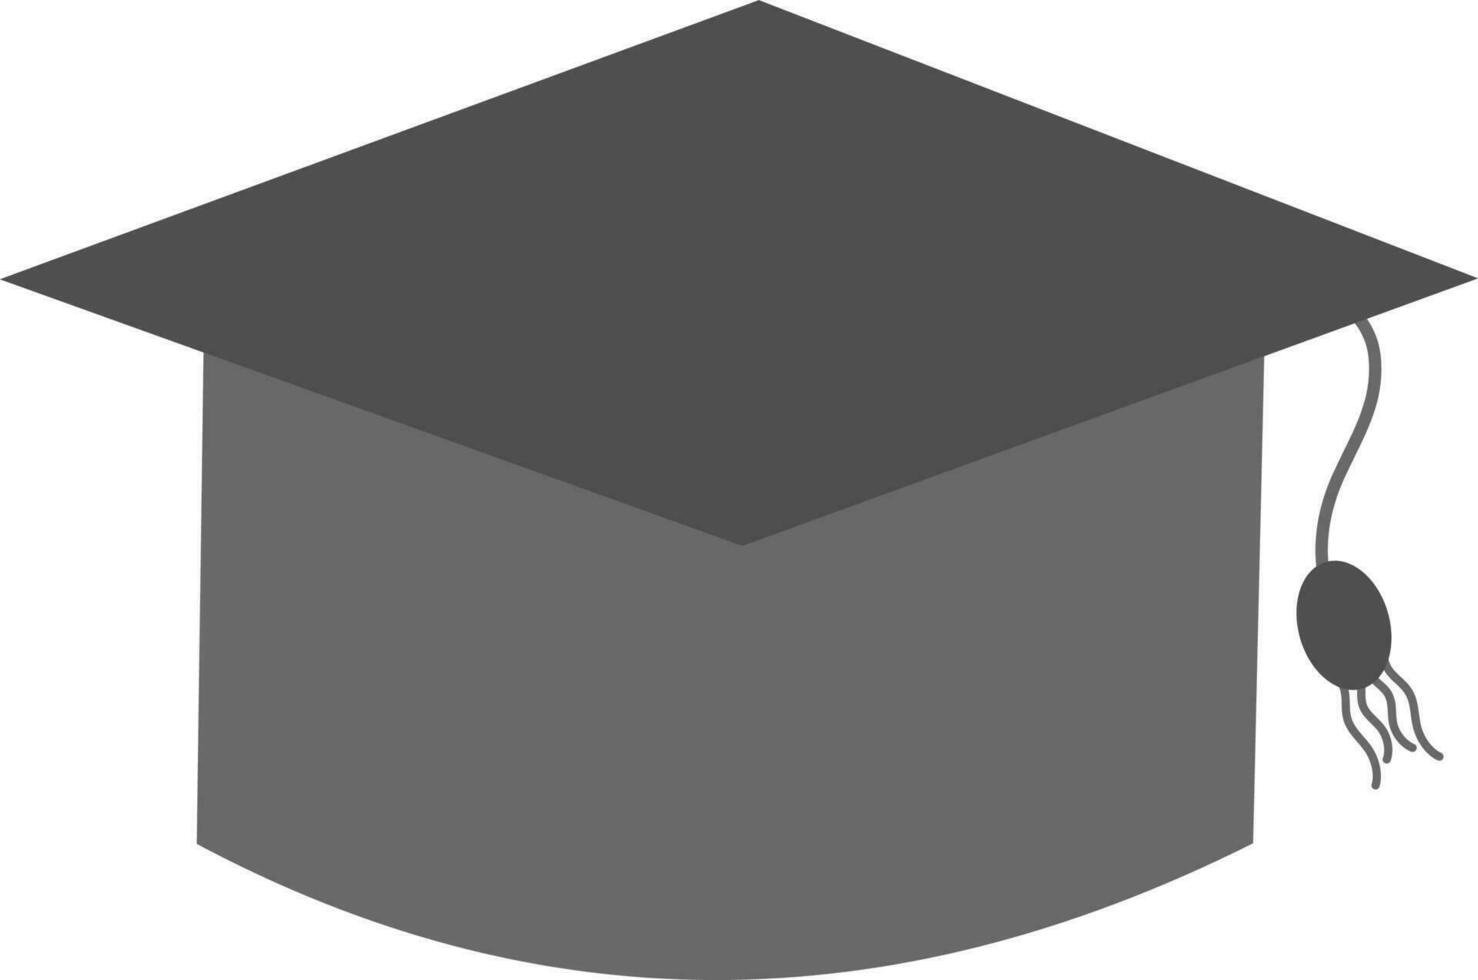 Black Graduation Cap Icon In Flat Style. vector